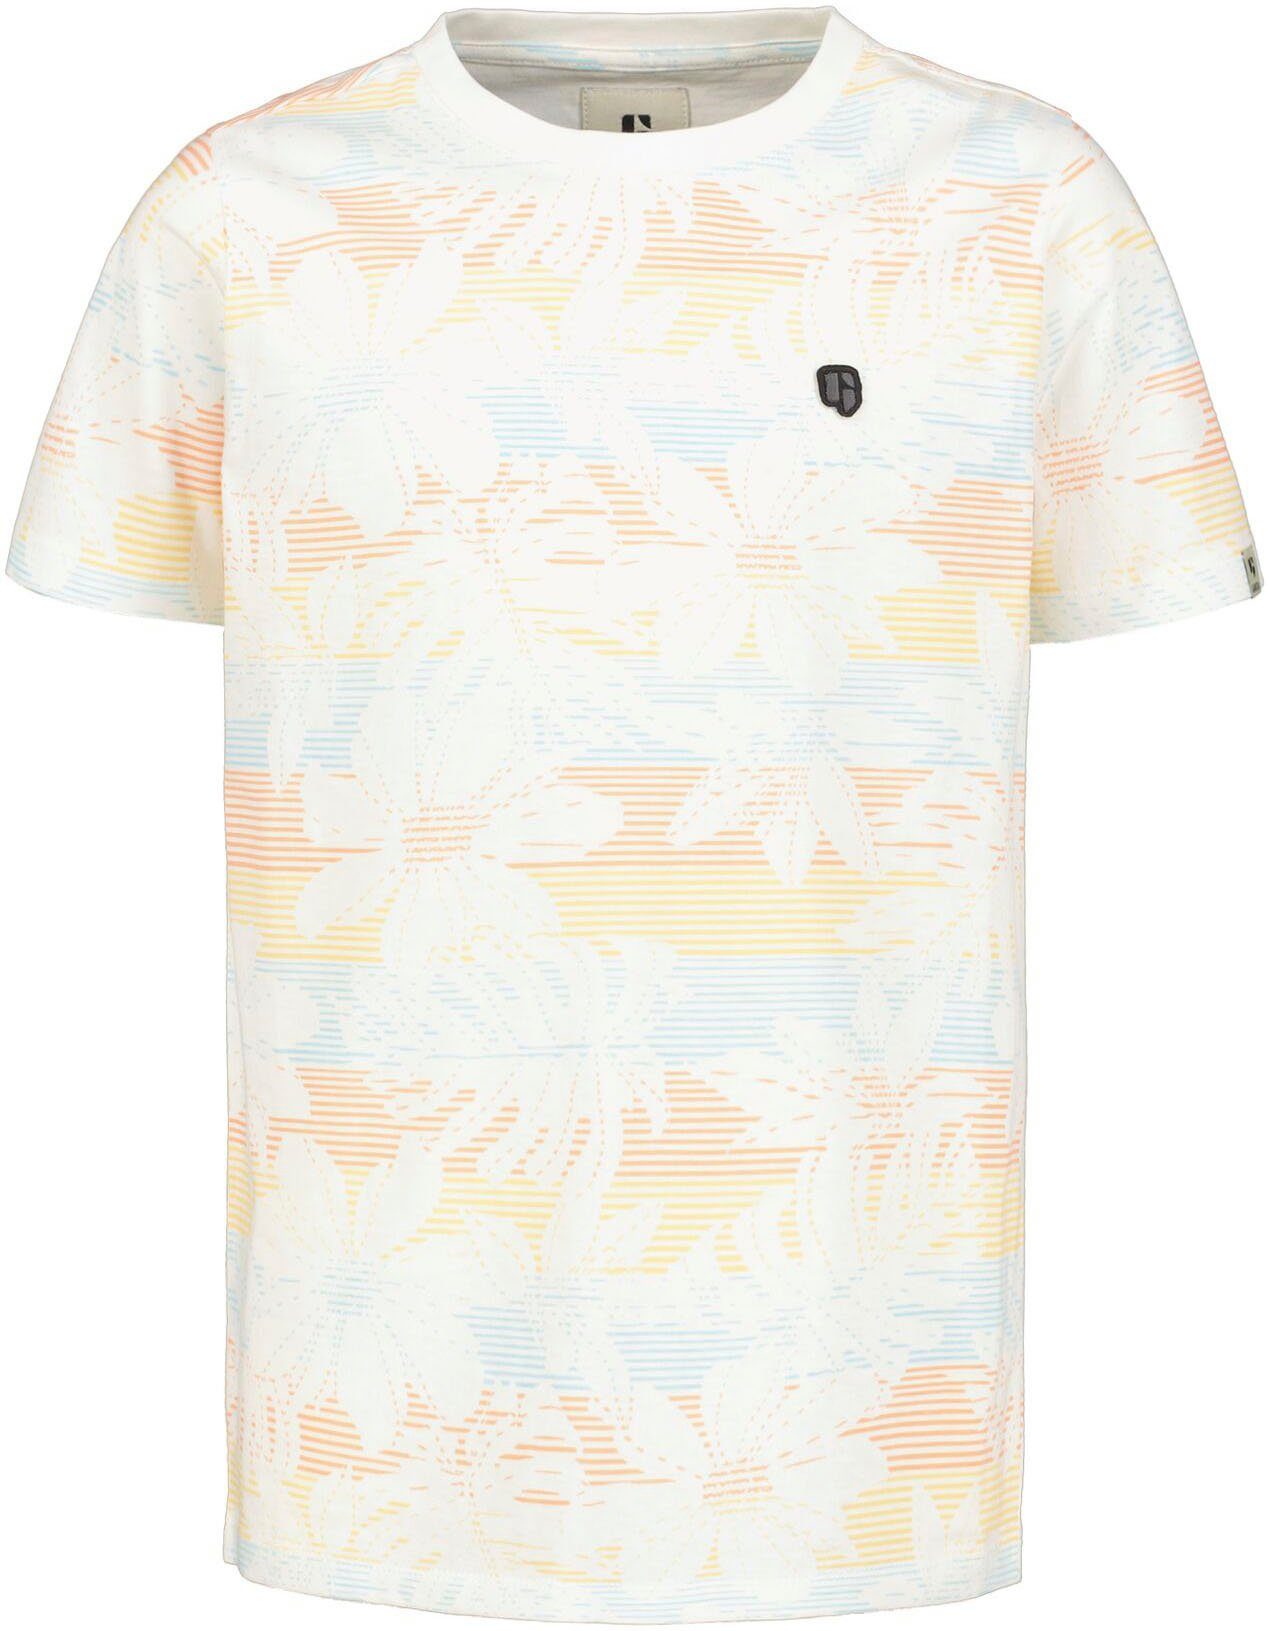 Garcia T-Shirt mit floralem Allovermuster, for BOYS